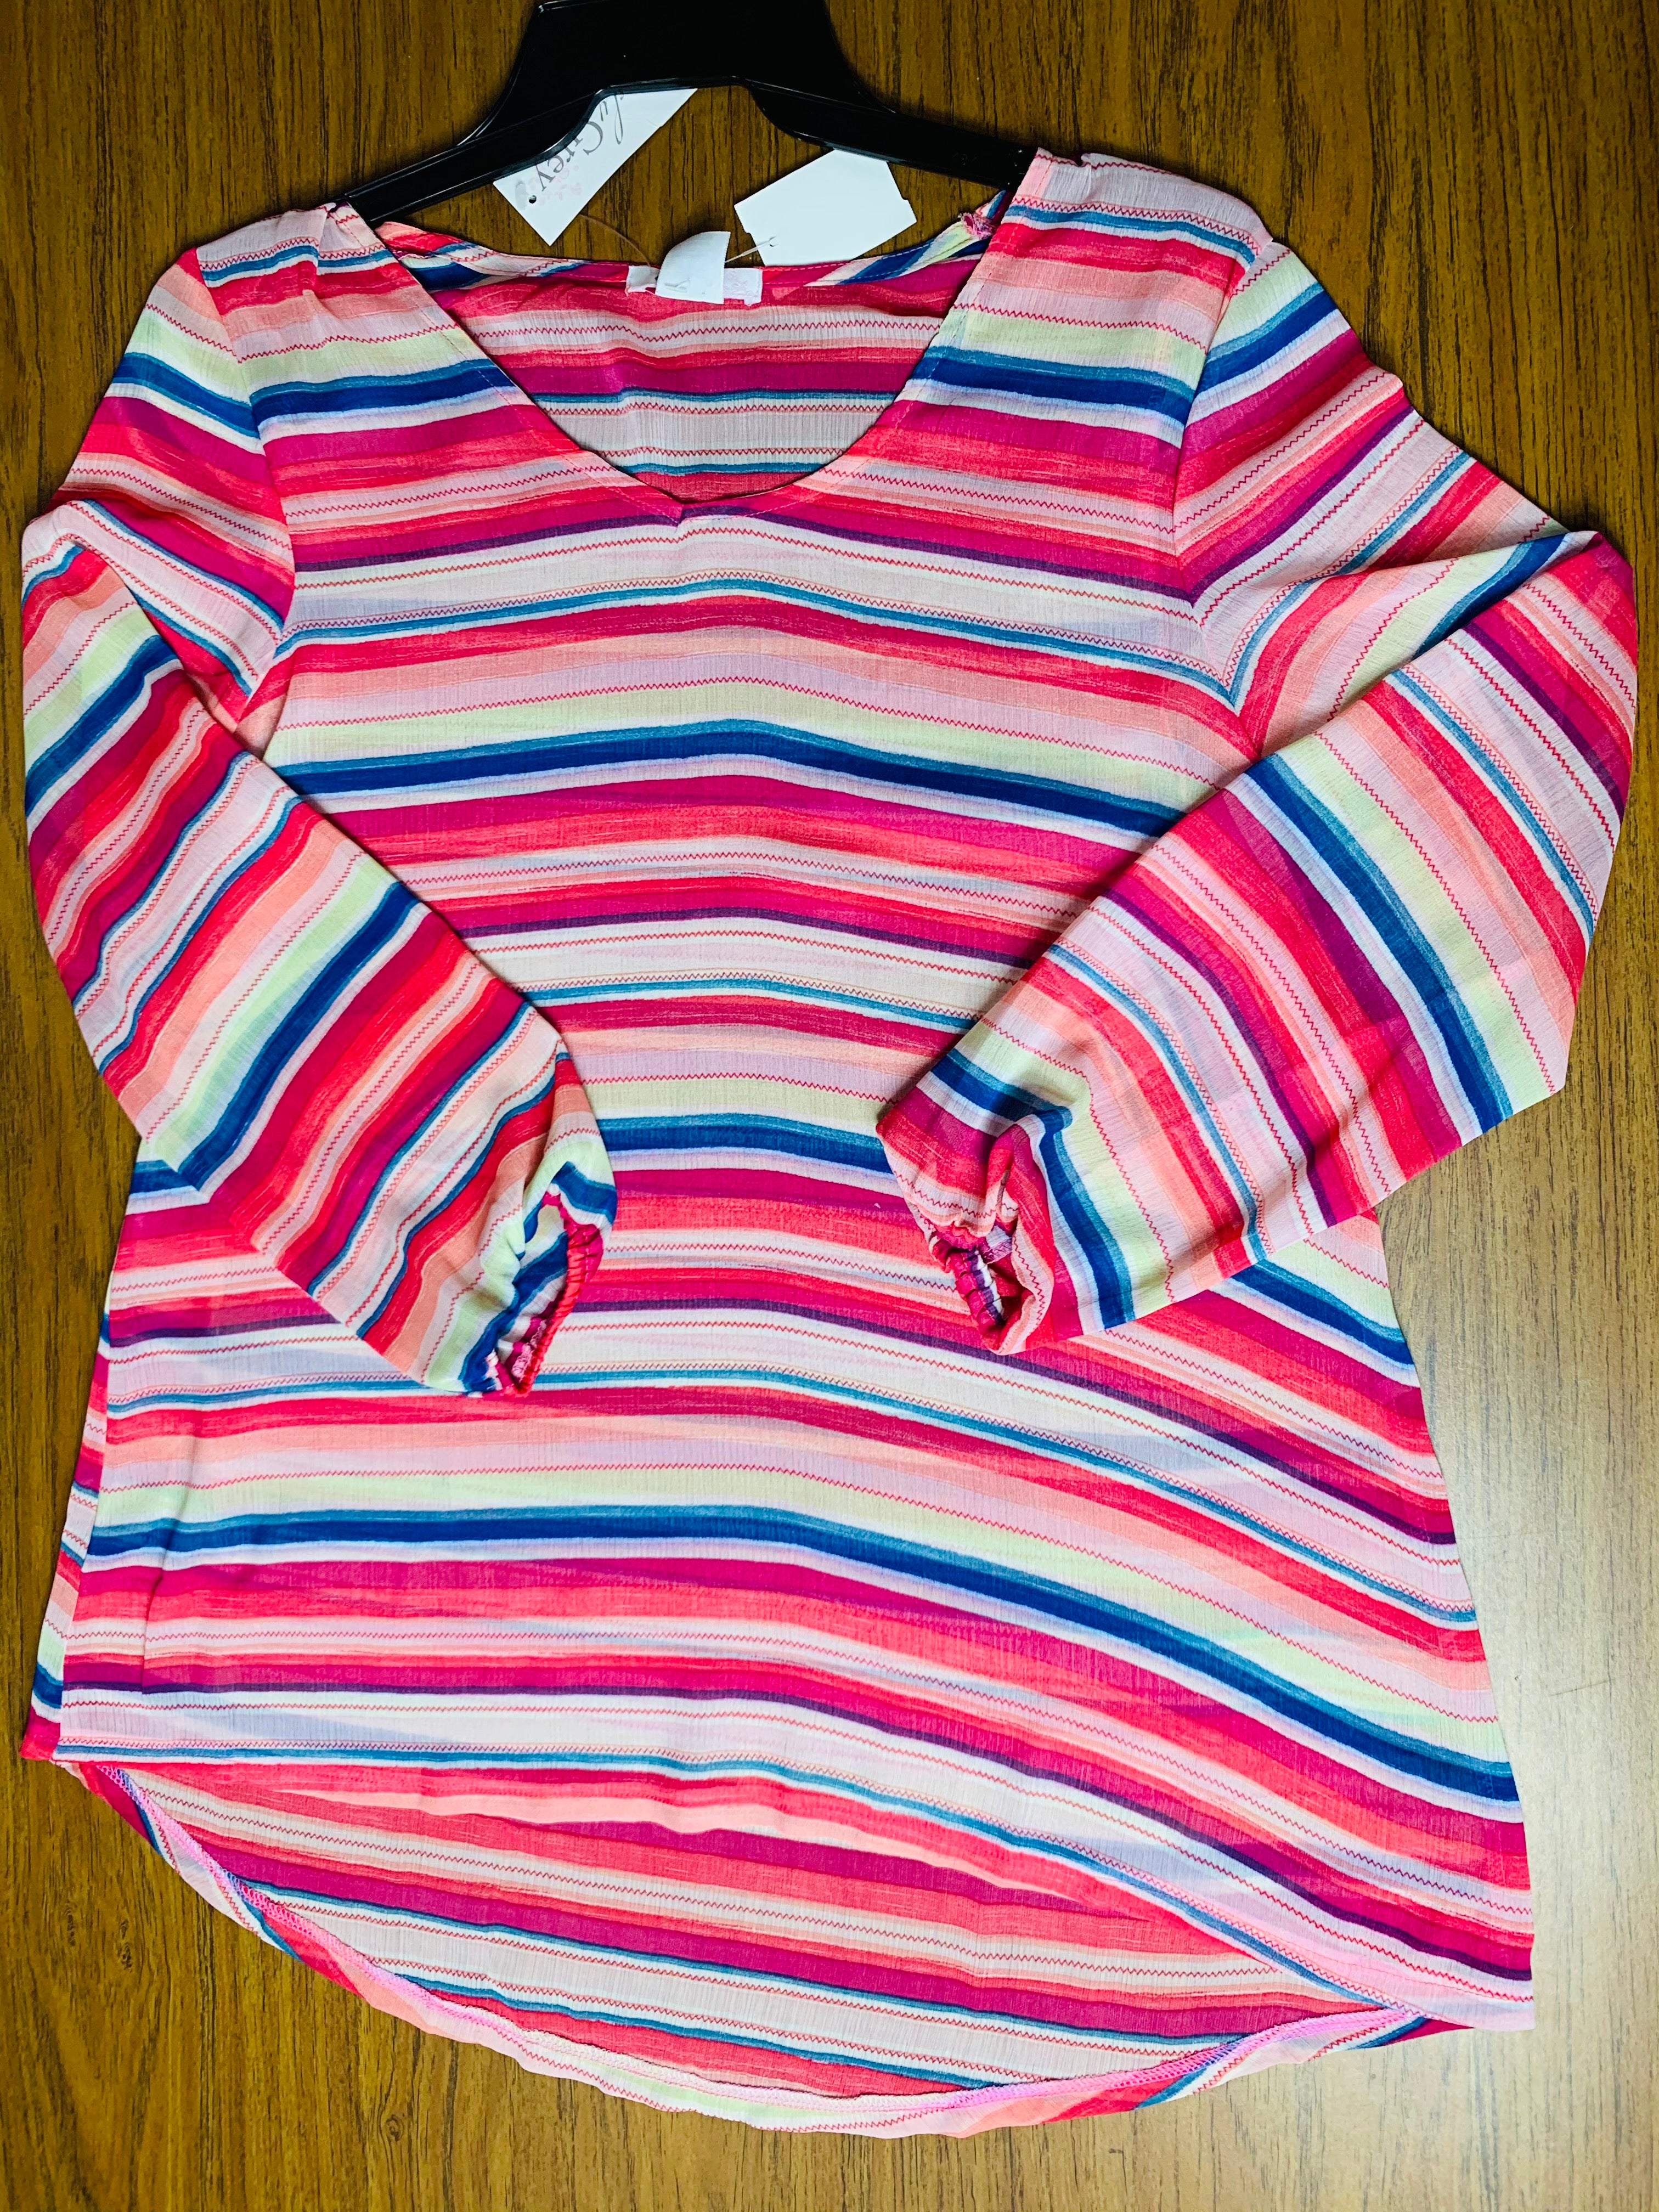 “Lina” Striped Shirt Size Small (last one)